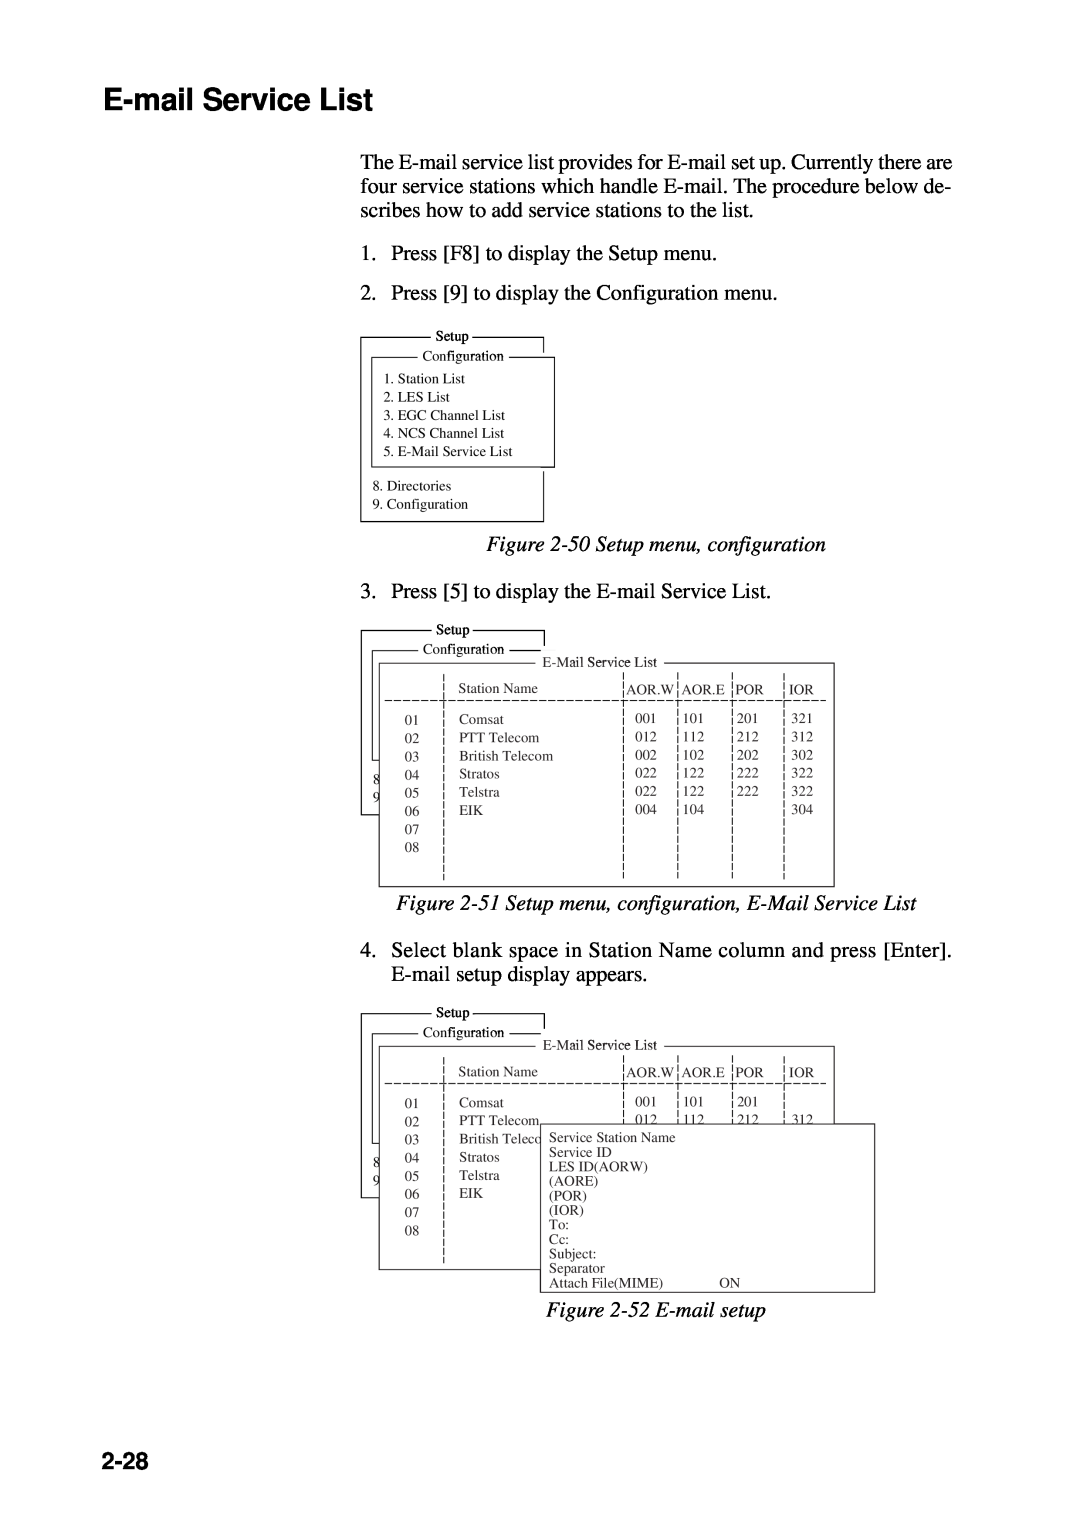 Furuno RC-1500-1T manual E-mail Service List, 2-28, 50 Setup menu, configuration, 52 E-mail setup 